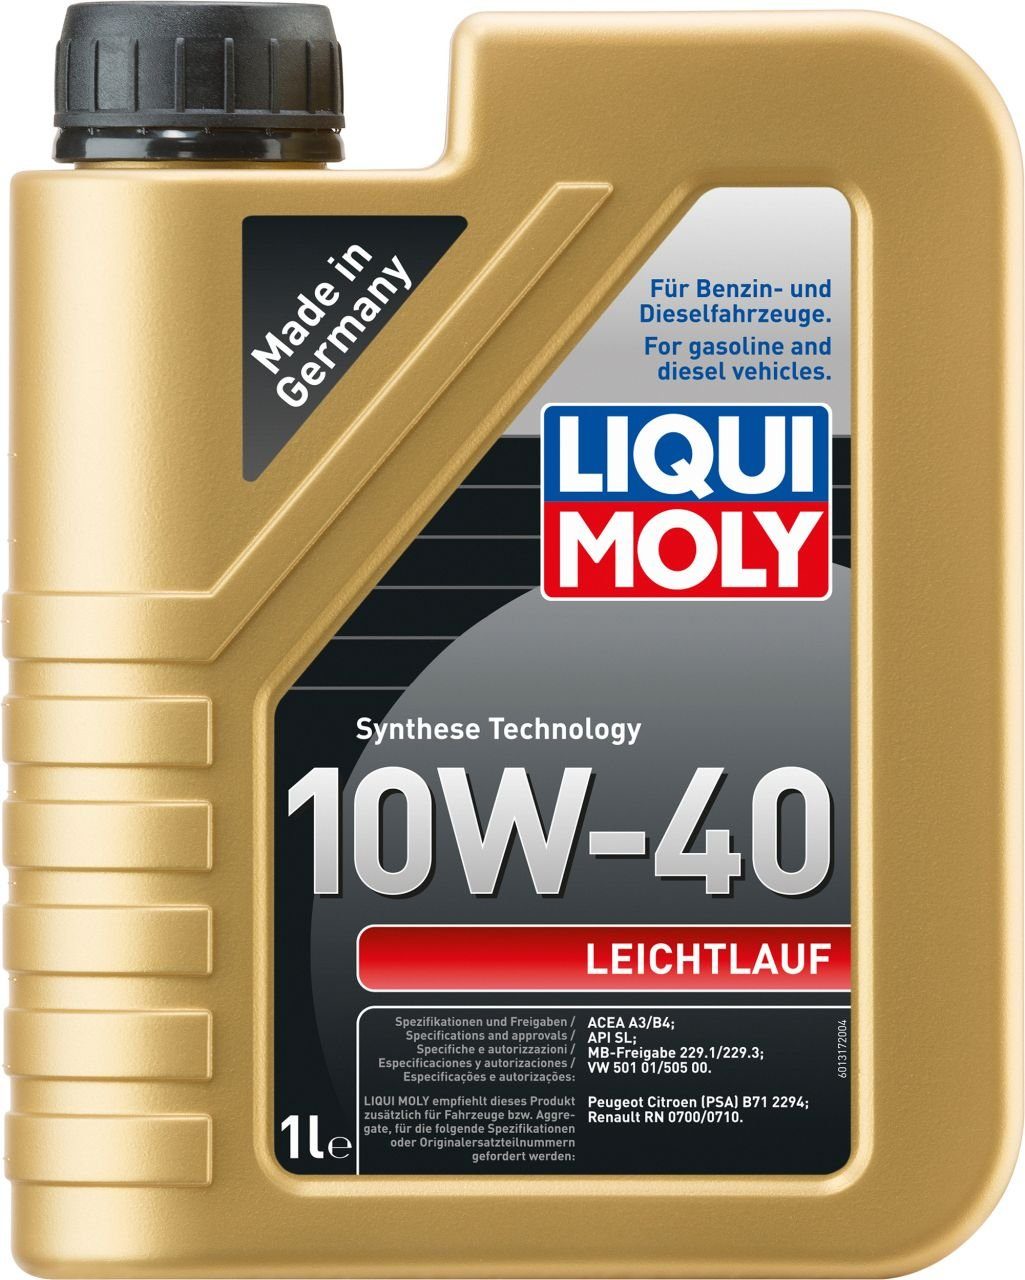 Liqui Moly Universalöl Liqui Moly Motoröl Leichtlauf 10W-40 1 L